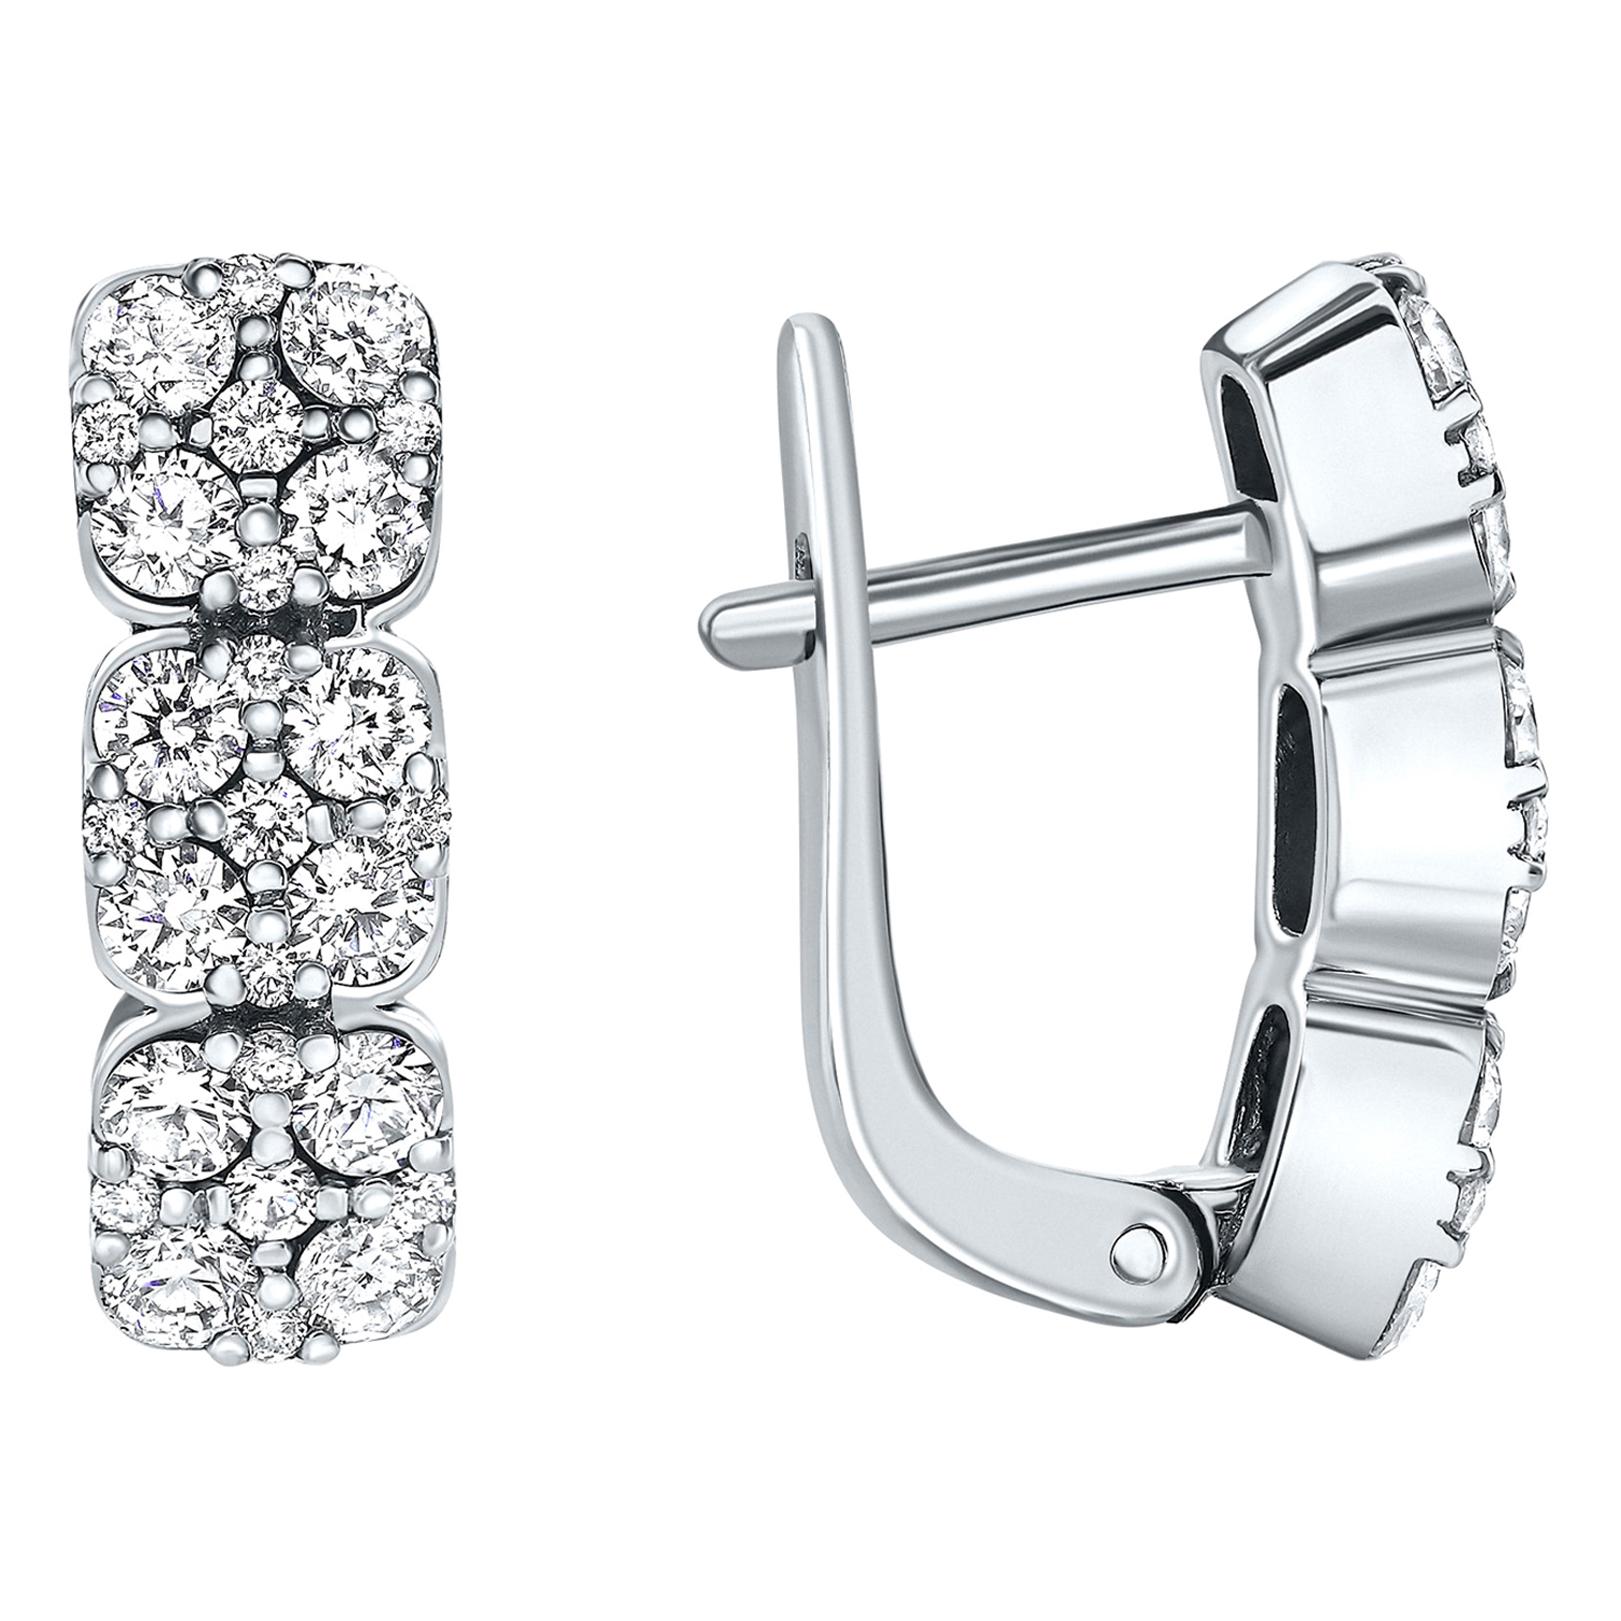 1.19 Carat Round Diamond Earrings in 14k White Gold - Shlomit Rogel